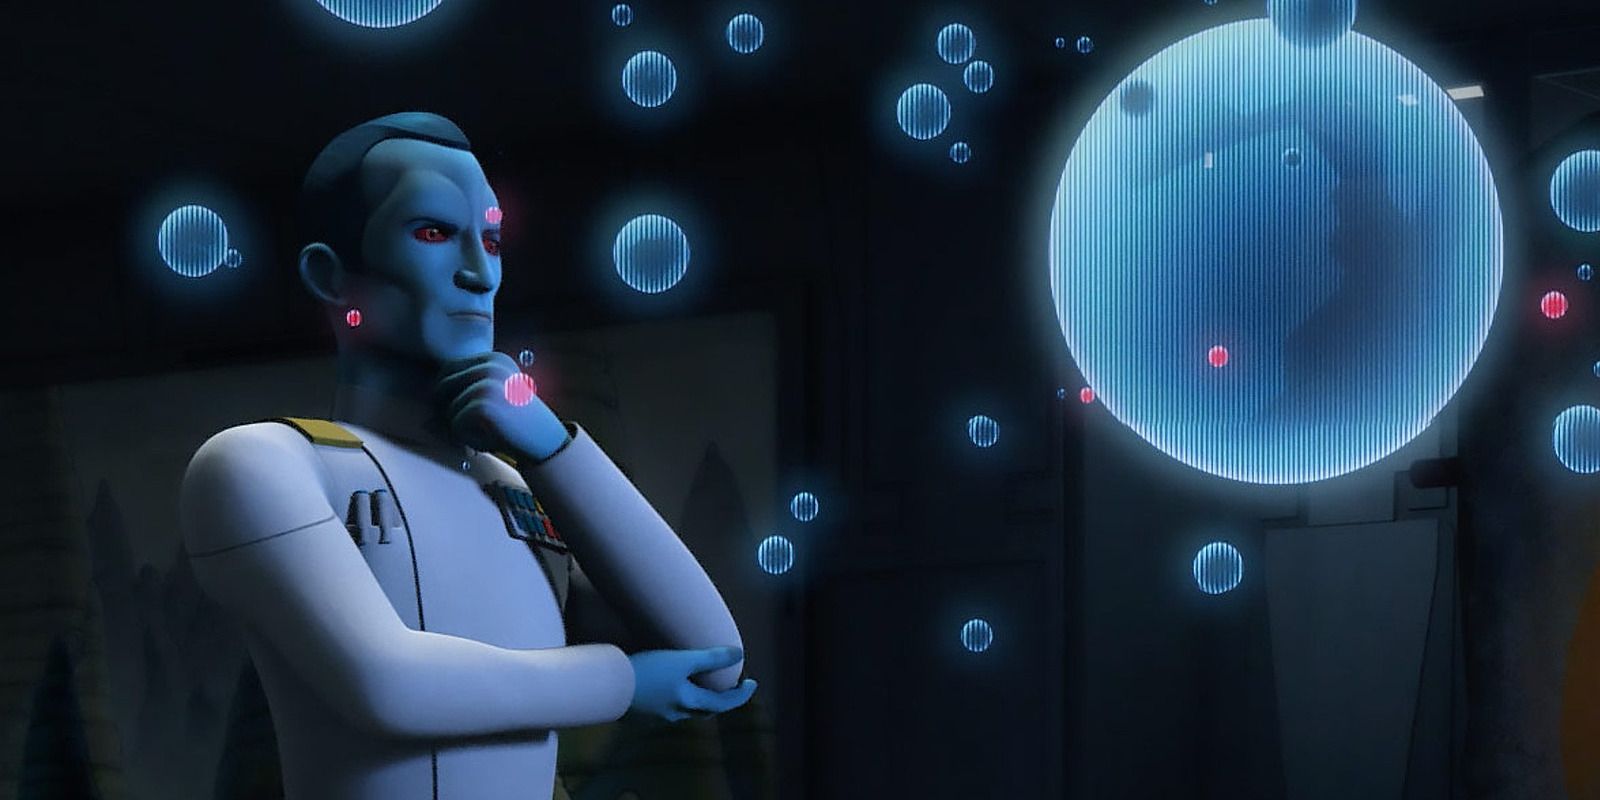 Grand Admiral Thrawn studies planets in Star Wars Rebels